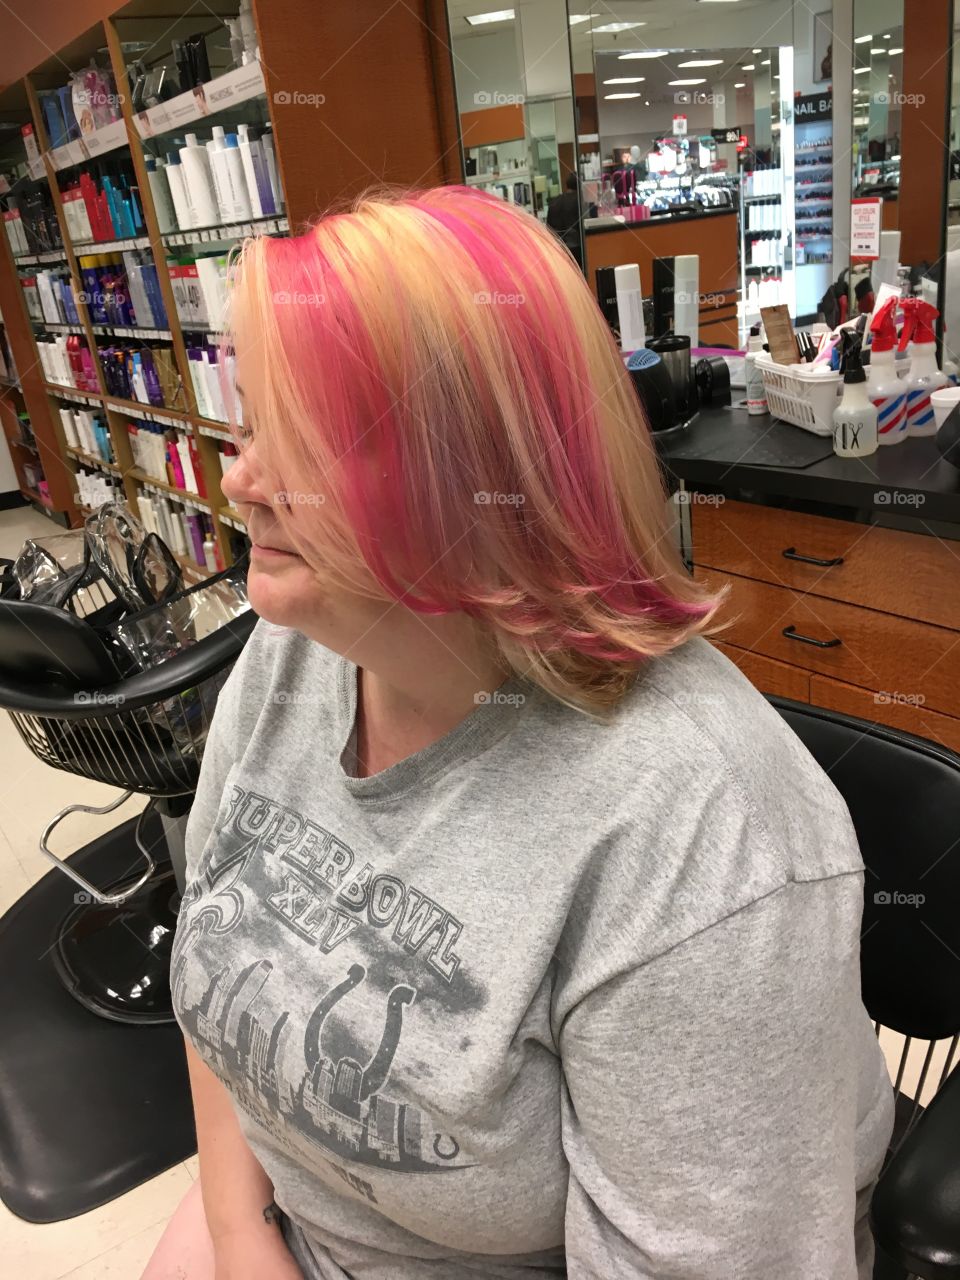 She said pink is her favorite color so we did pink n blonde  